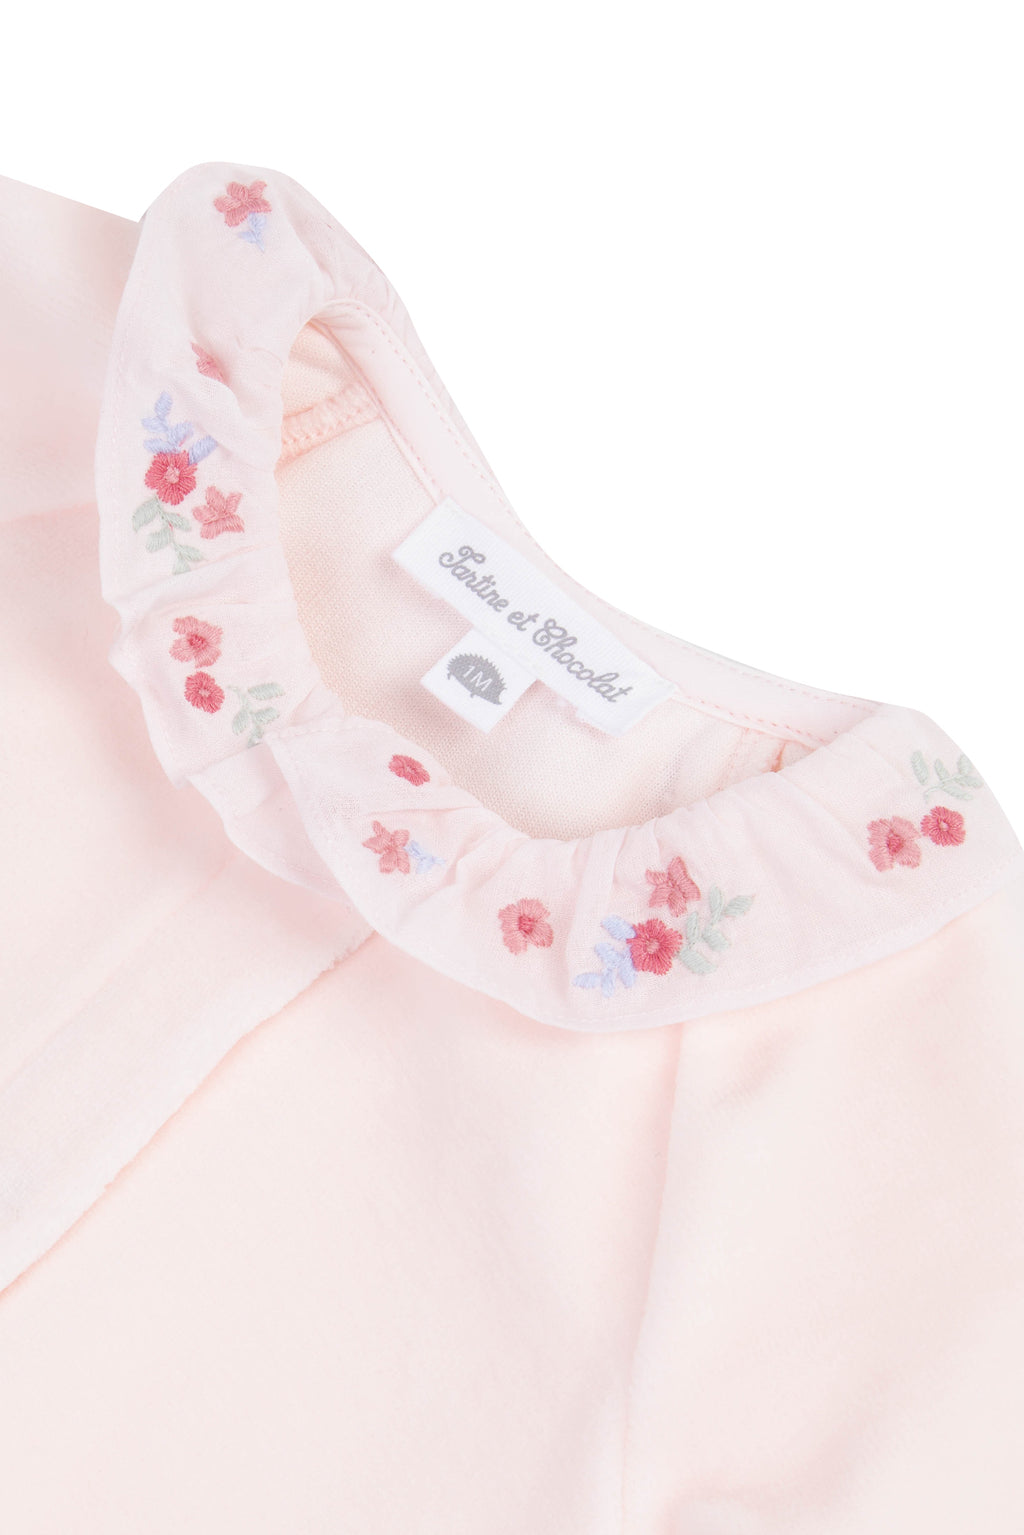 Pajamas - Velvet Pale pink Embrodery flowery